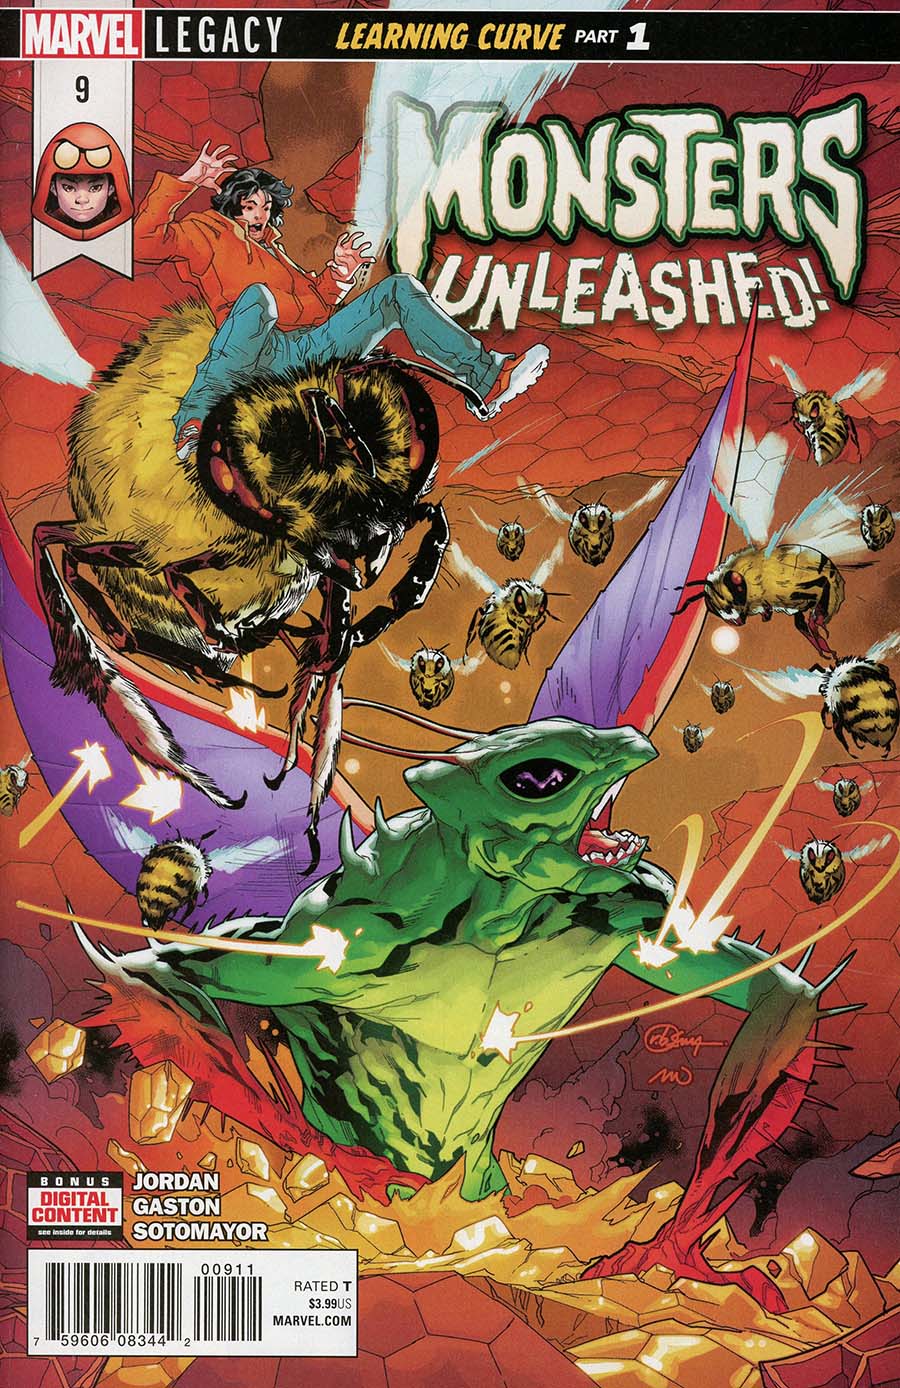 Monsters Unleashed Vol 2 #9 (Marvel Legacy Tie-In)